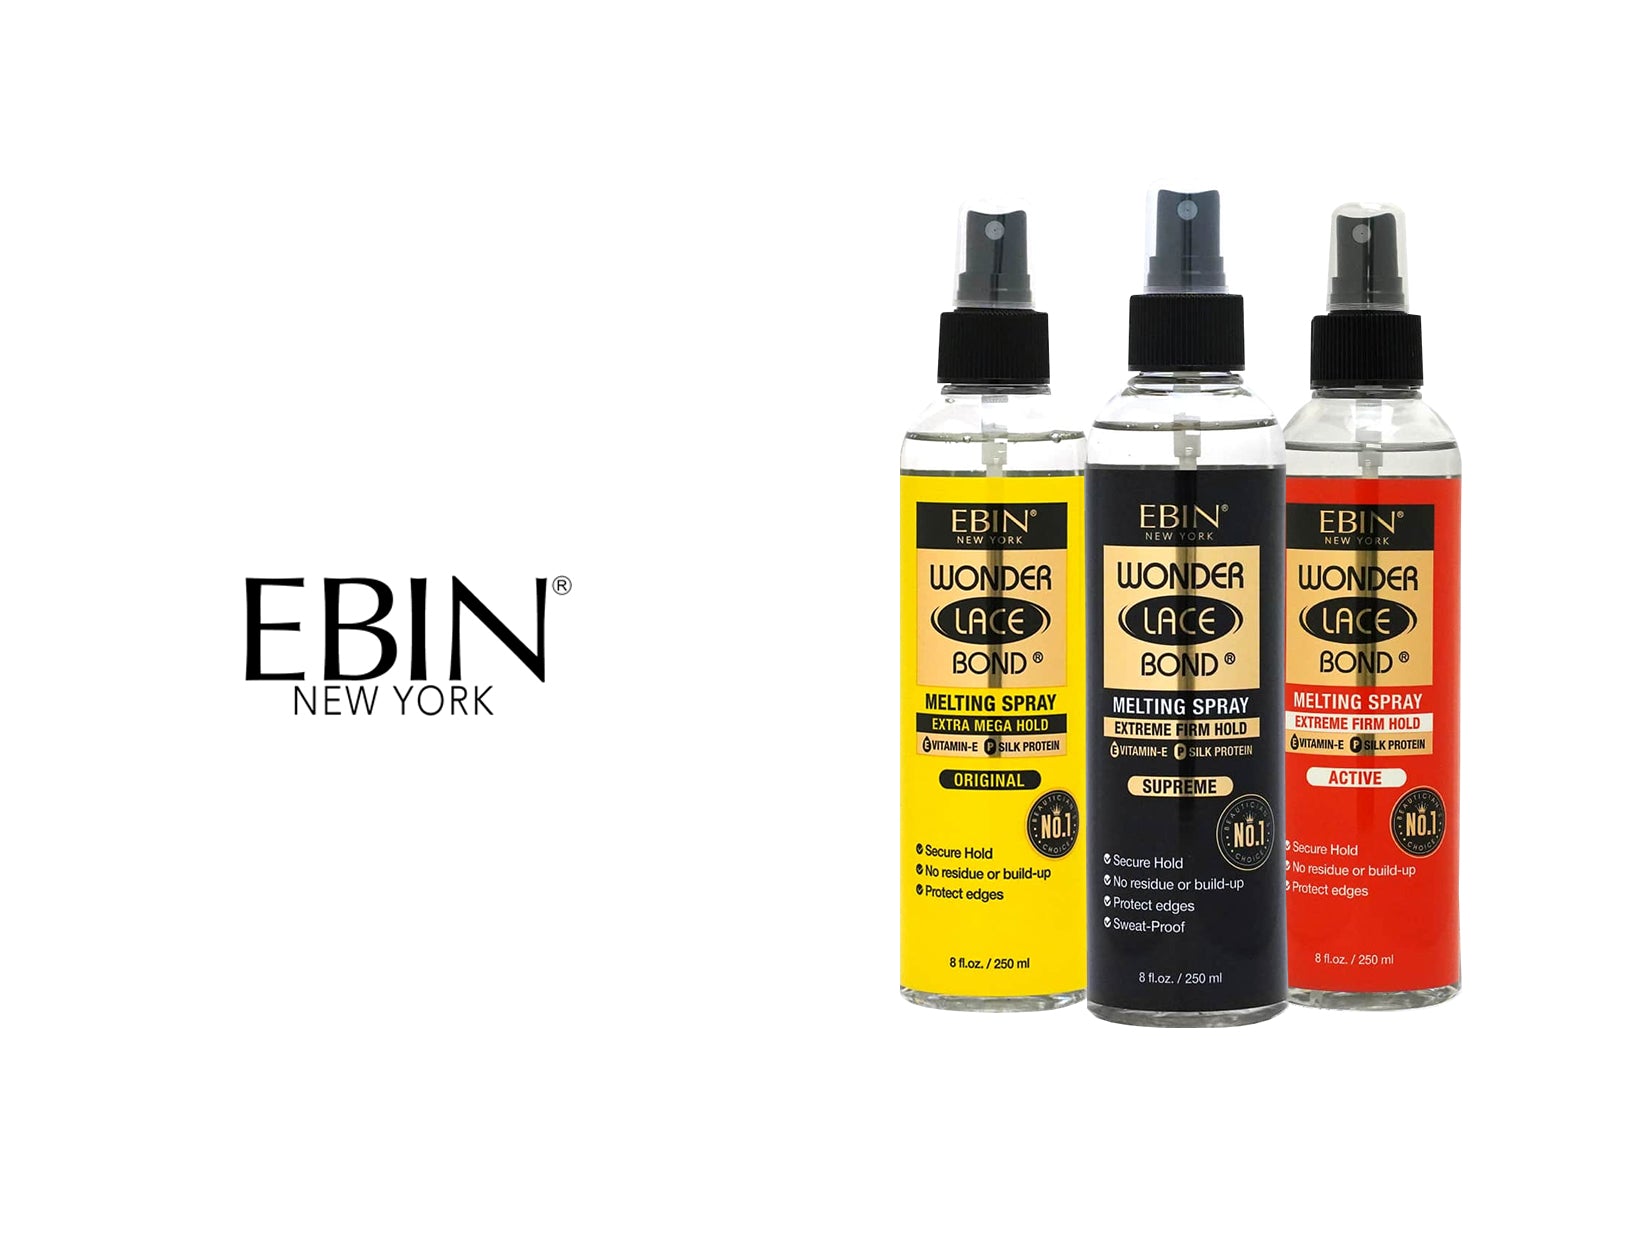 Ebin - Wonder Bond Tinted Lace Melt Spray Medium Brown